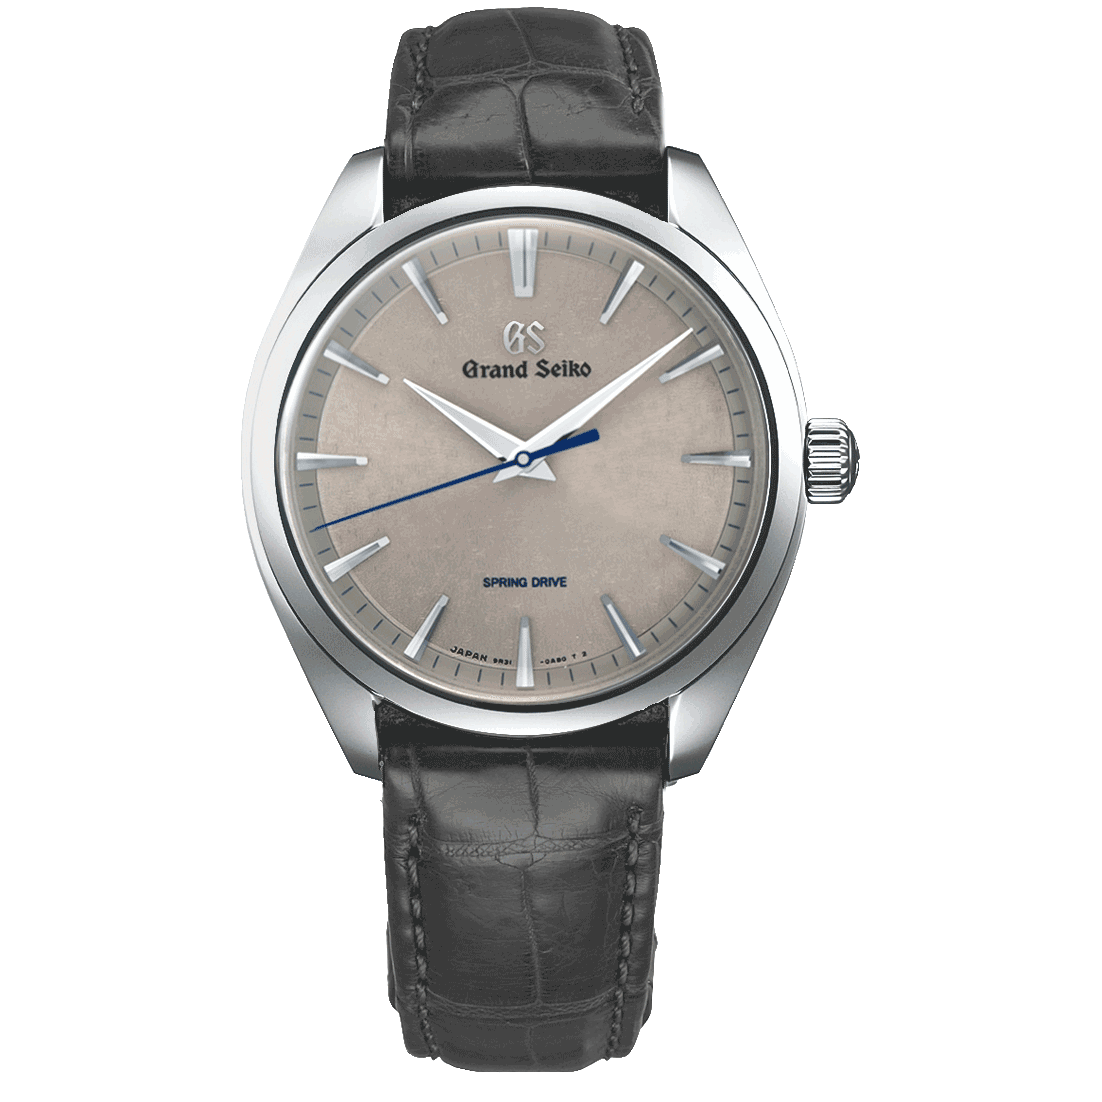 Grey dial Grand Seiko SBGY023 watch. 